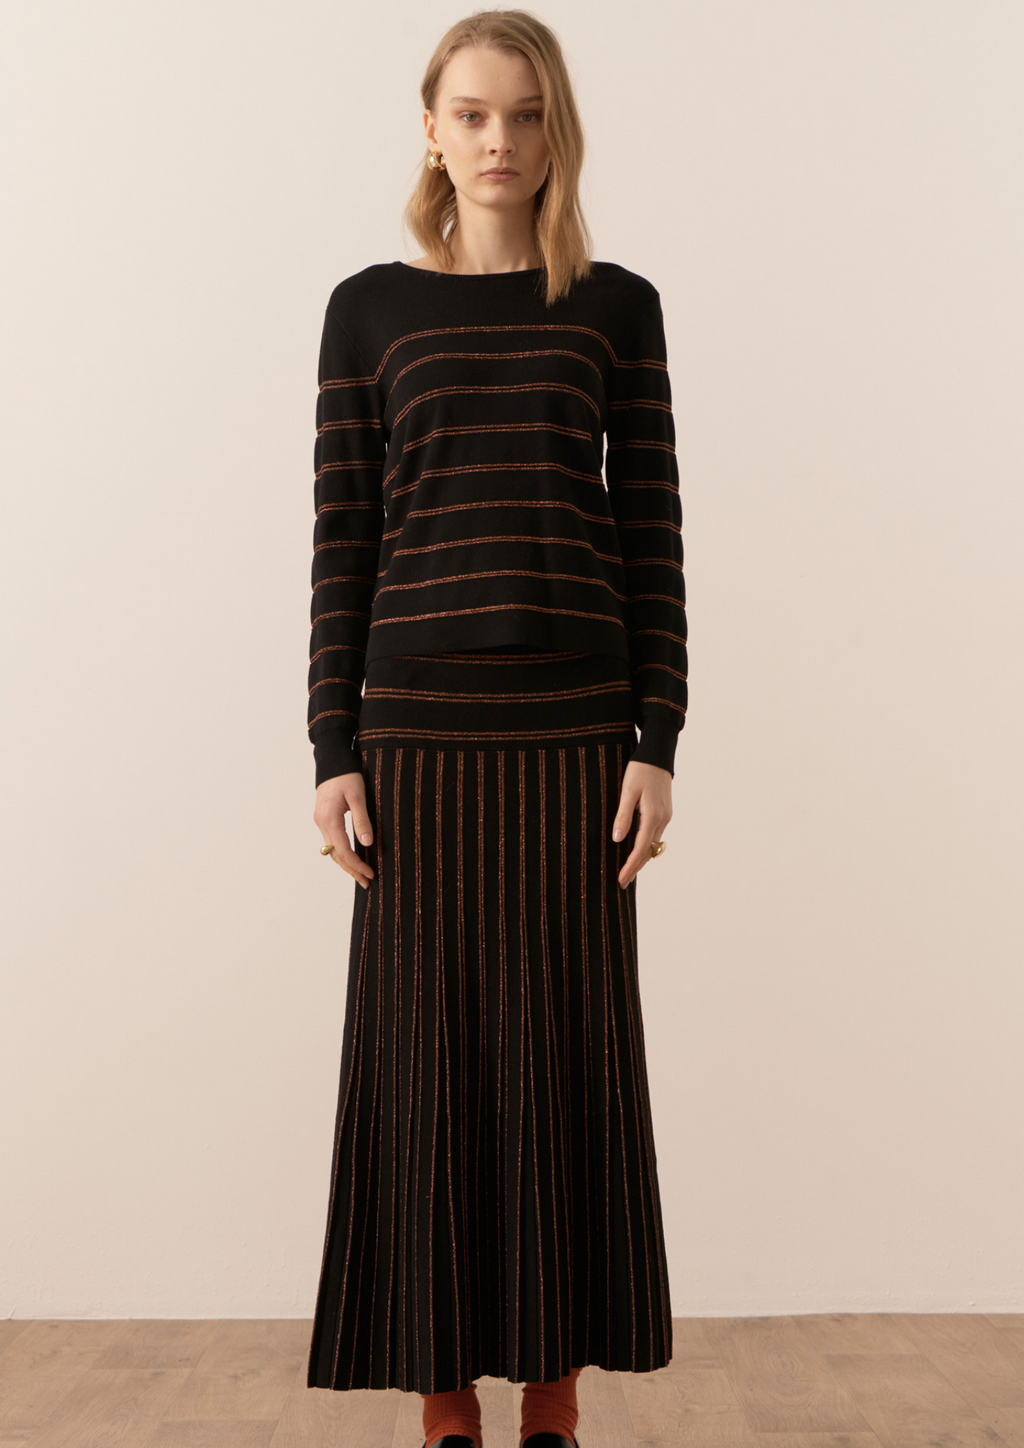 Pol - Gizelle Lurex Pleat Skirt Black/Copper